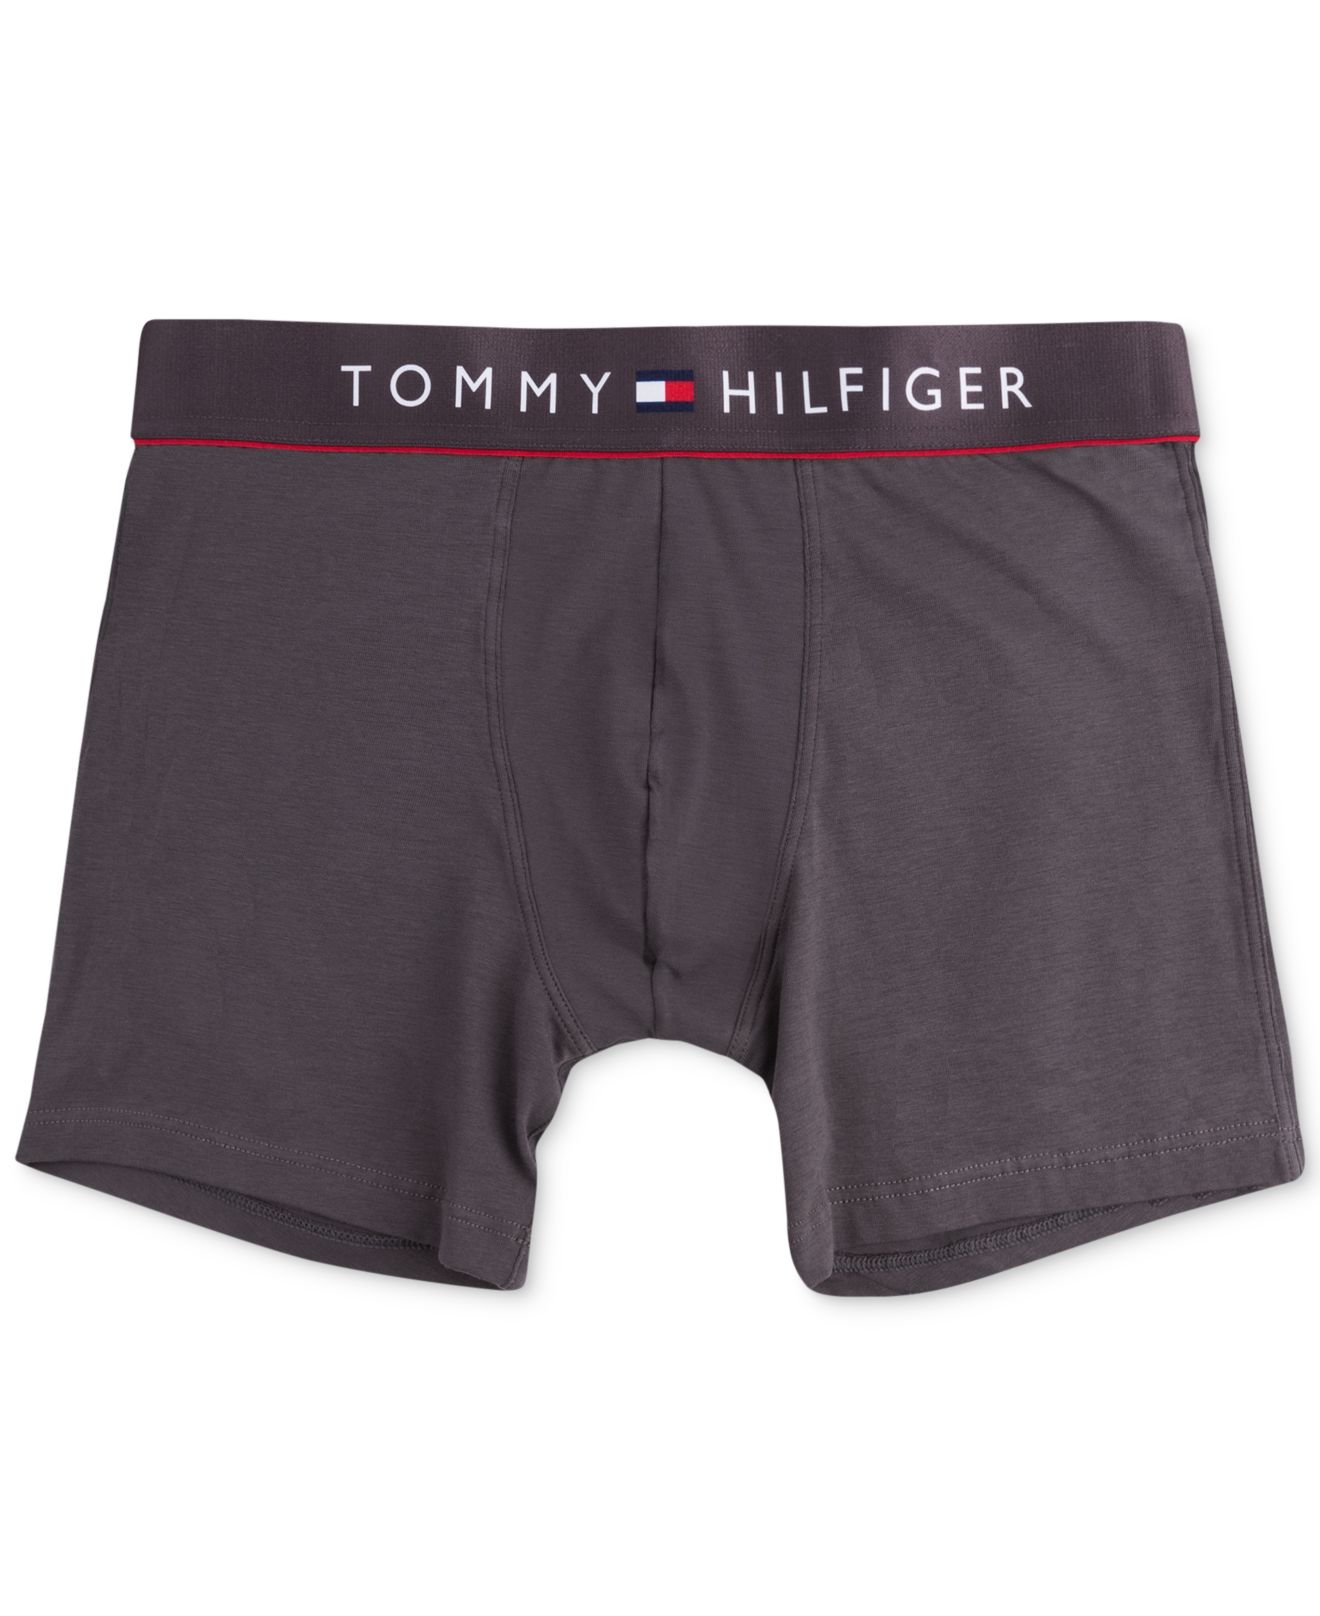 Tommy hilfiger Cotton Flex Boxer Briefs - 09t2771 in Gray for Men ...